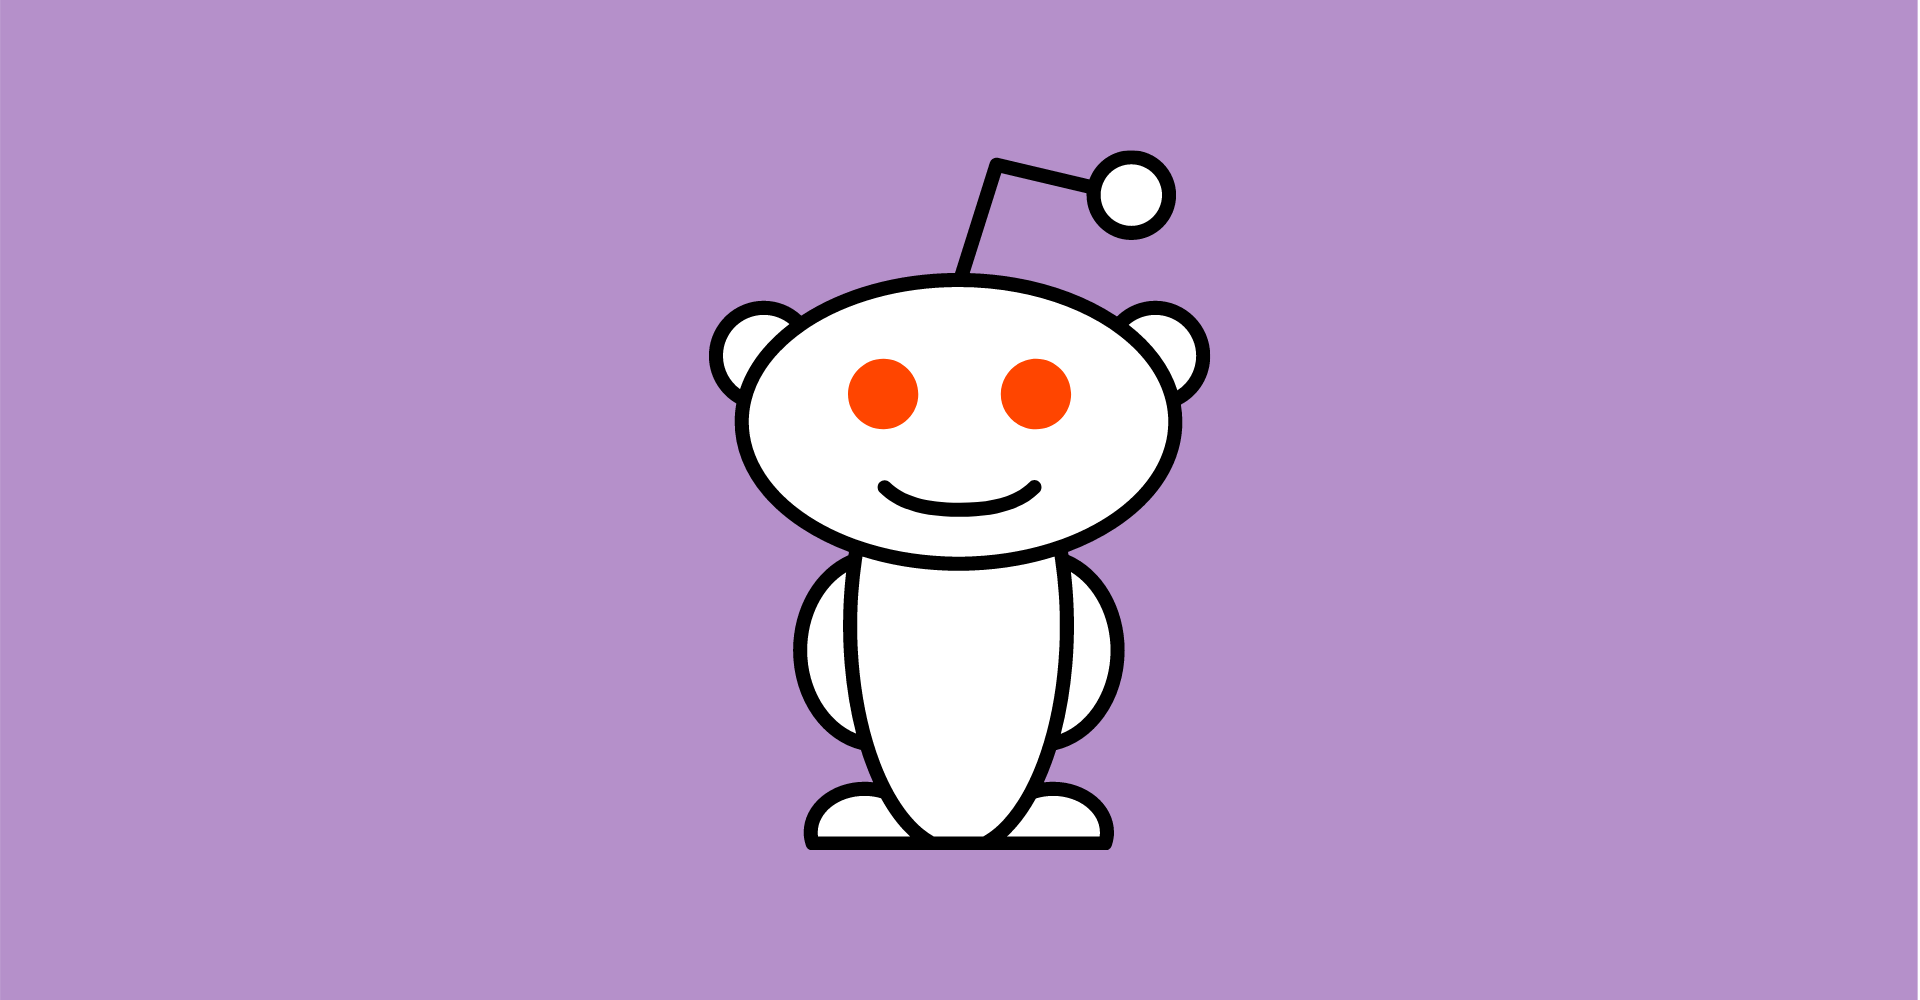 47 Most Popular Reddit Gift Ideas - Best & Unique Reddit Gifts